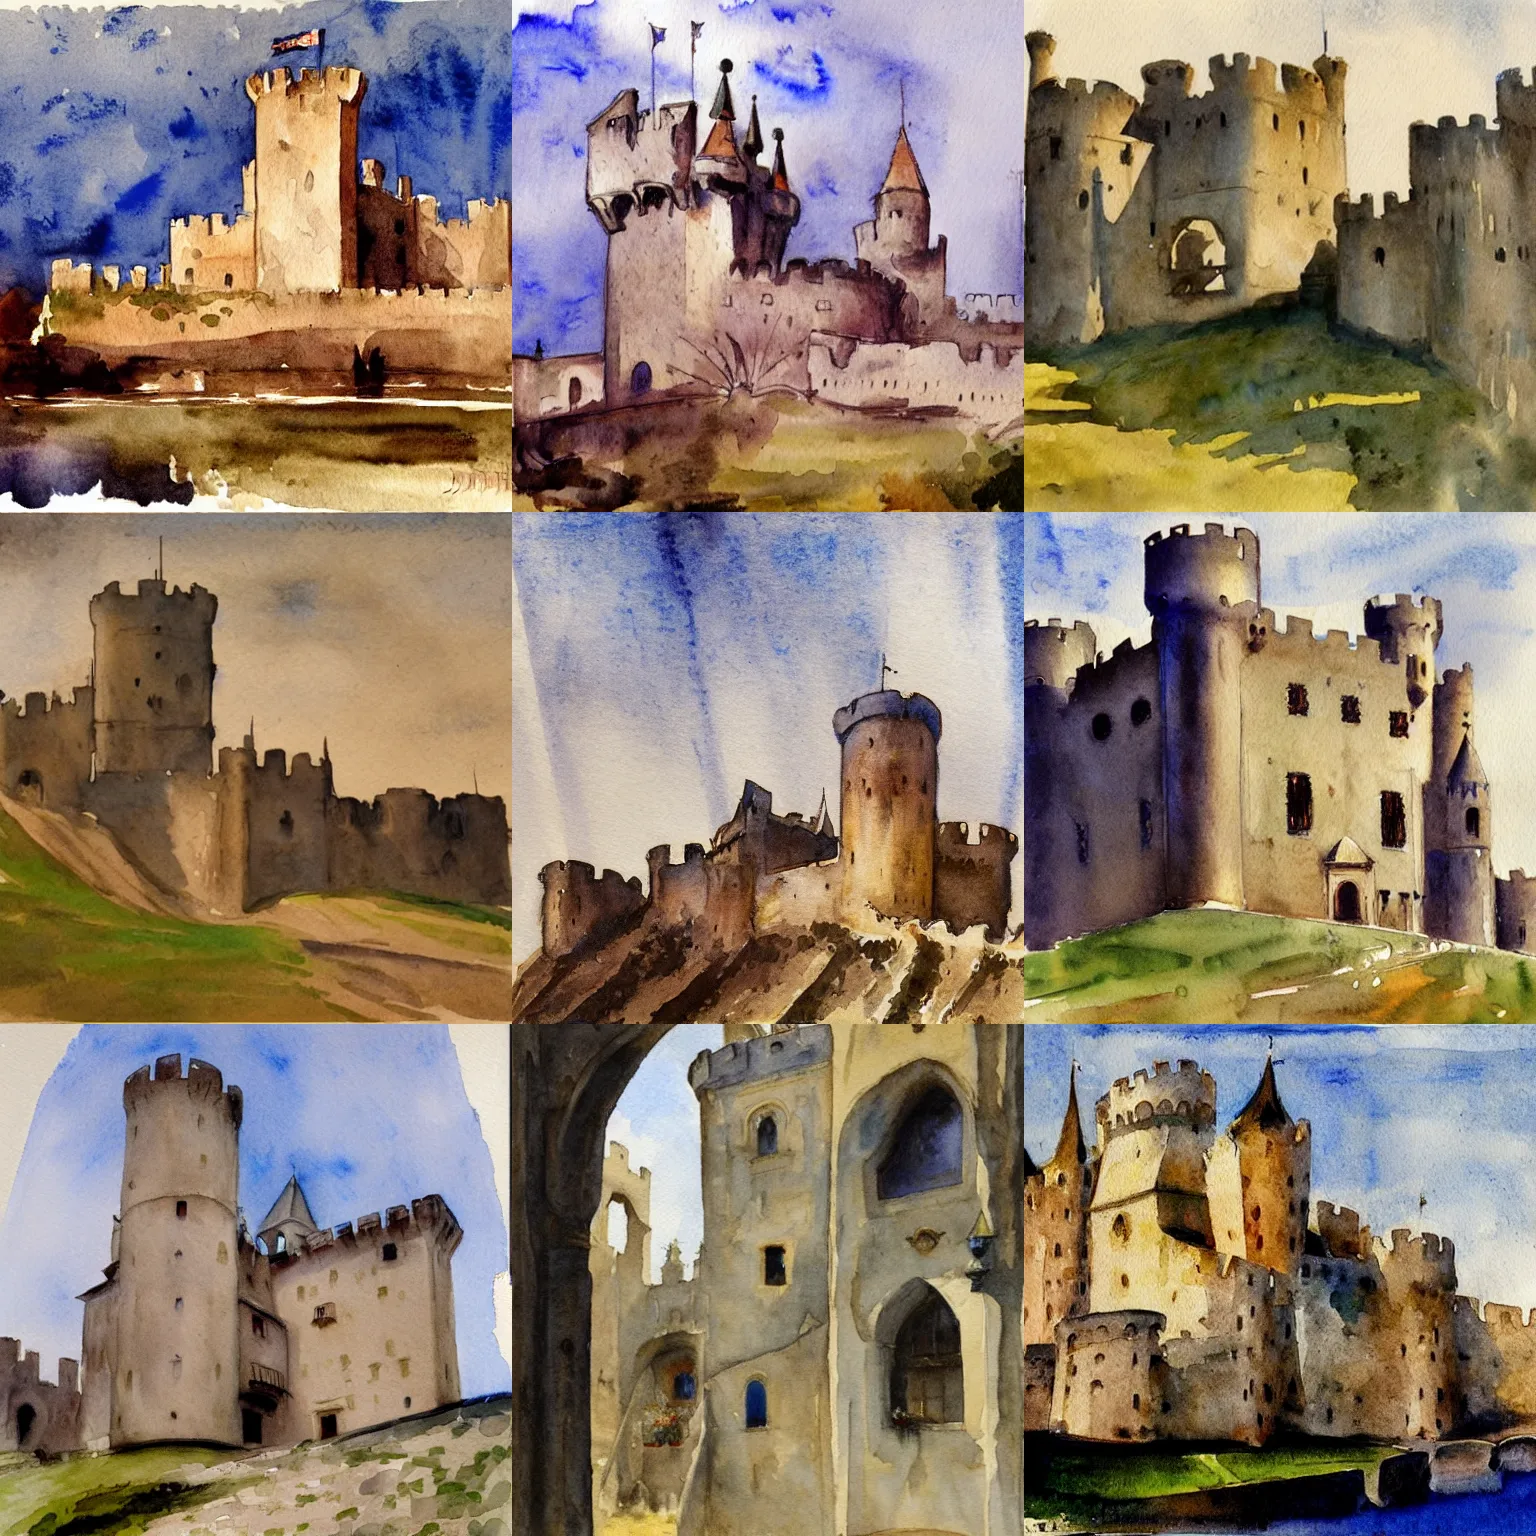 Prompt: medieval castle, watercolor by john singer sargent